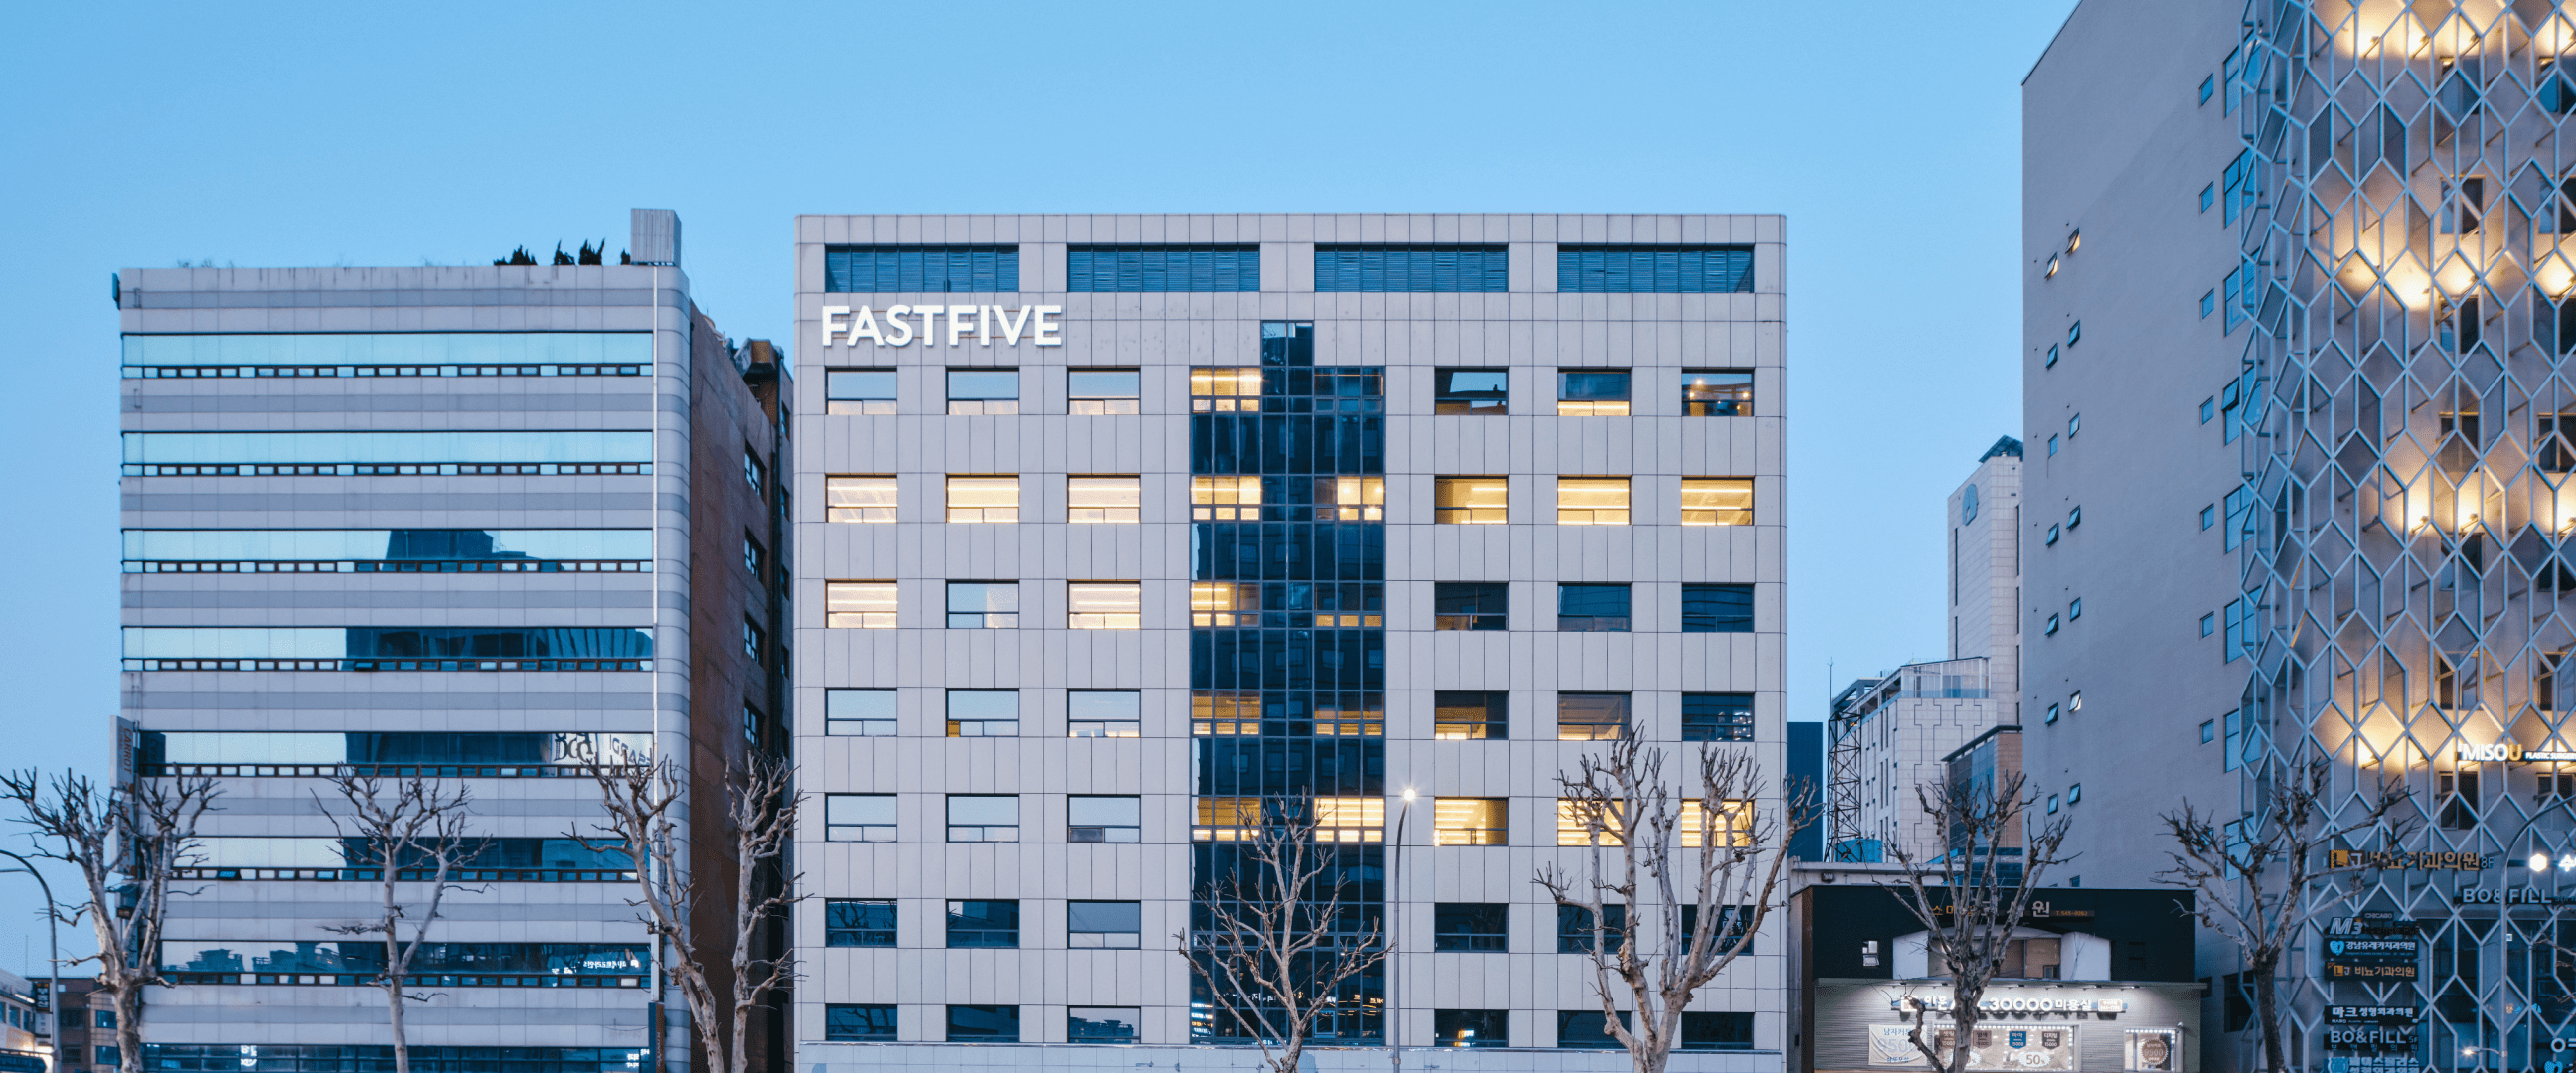 fastfive 빌딩